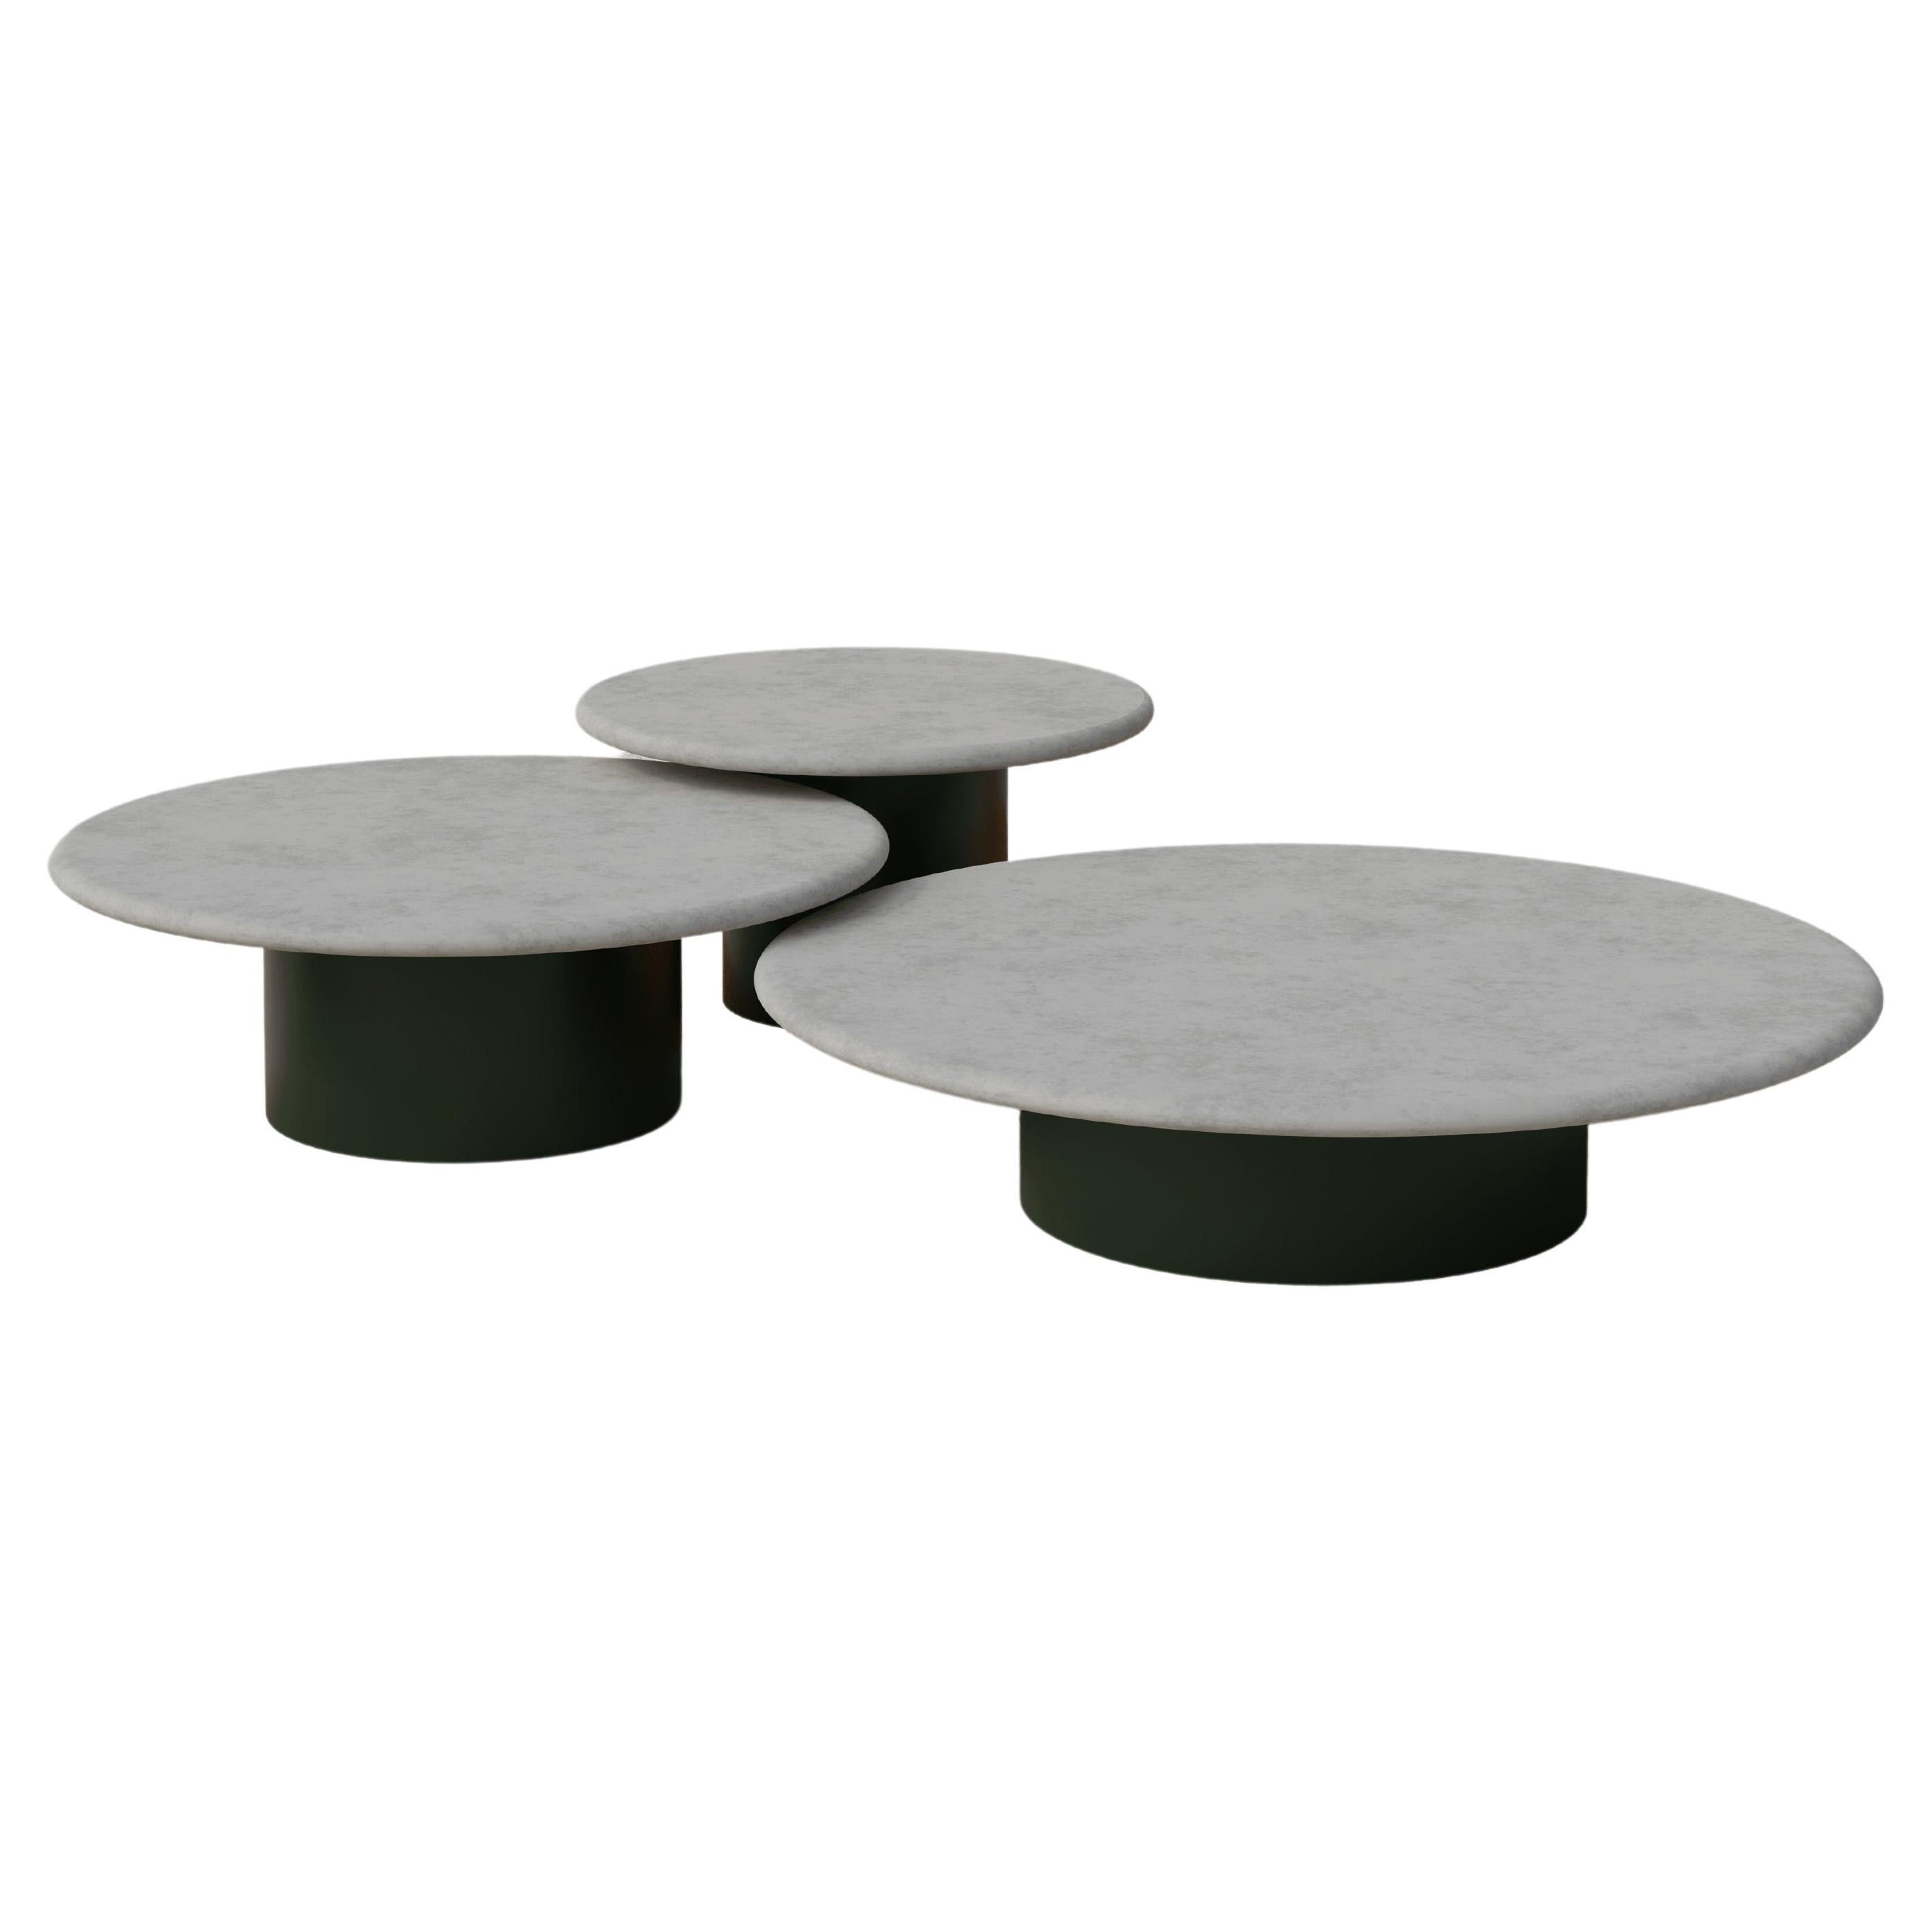 Raindrop Coffee Table Set, 600, 800, 1000, Microcrete / Moss Green For Sale